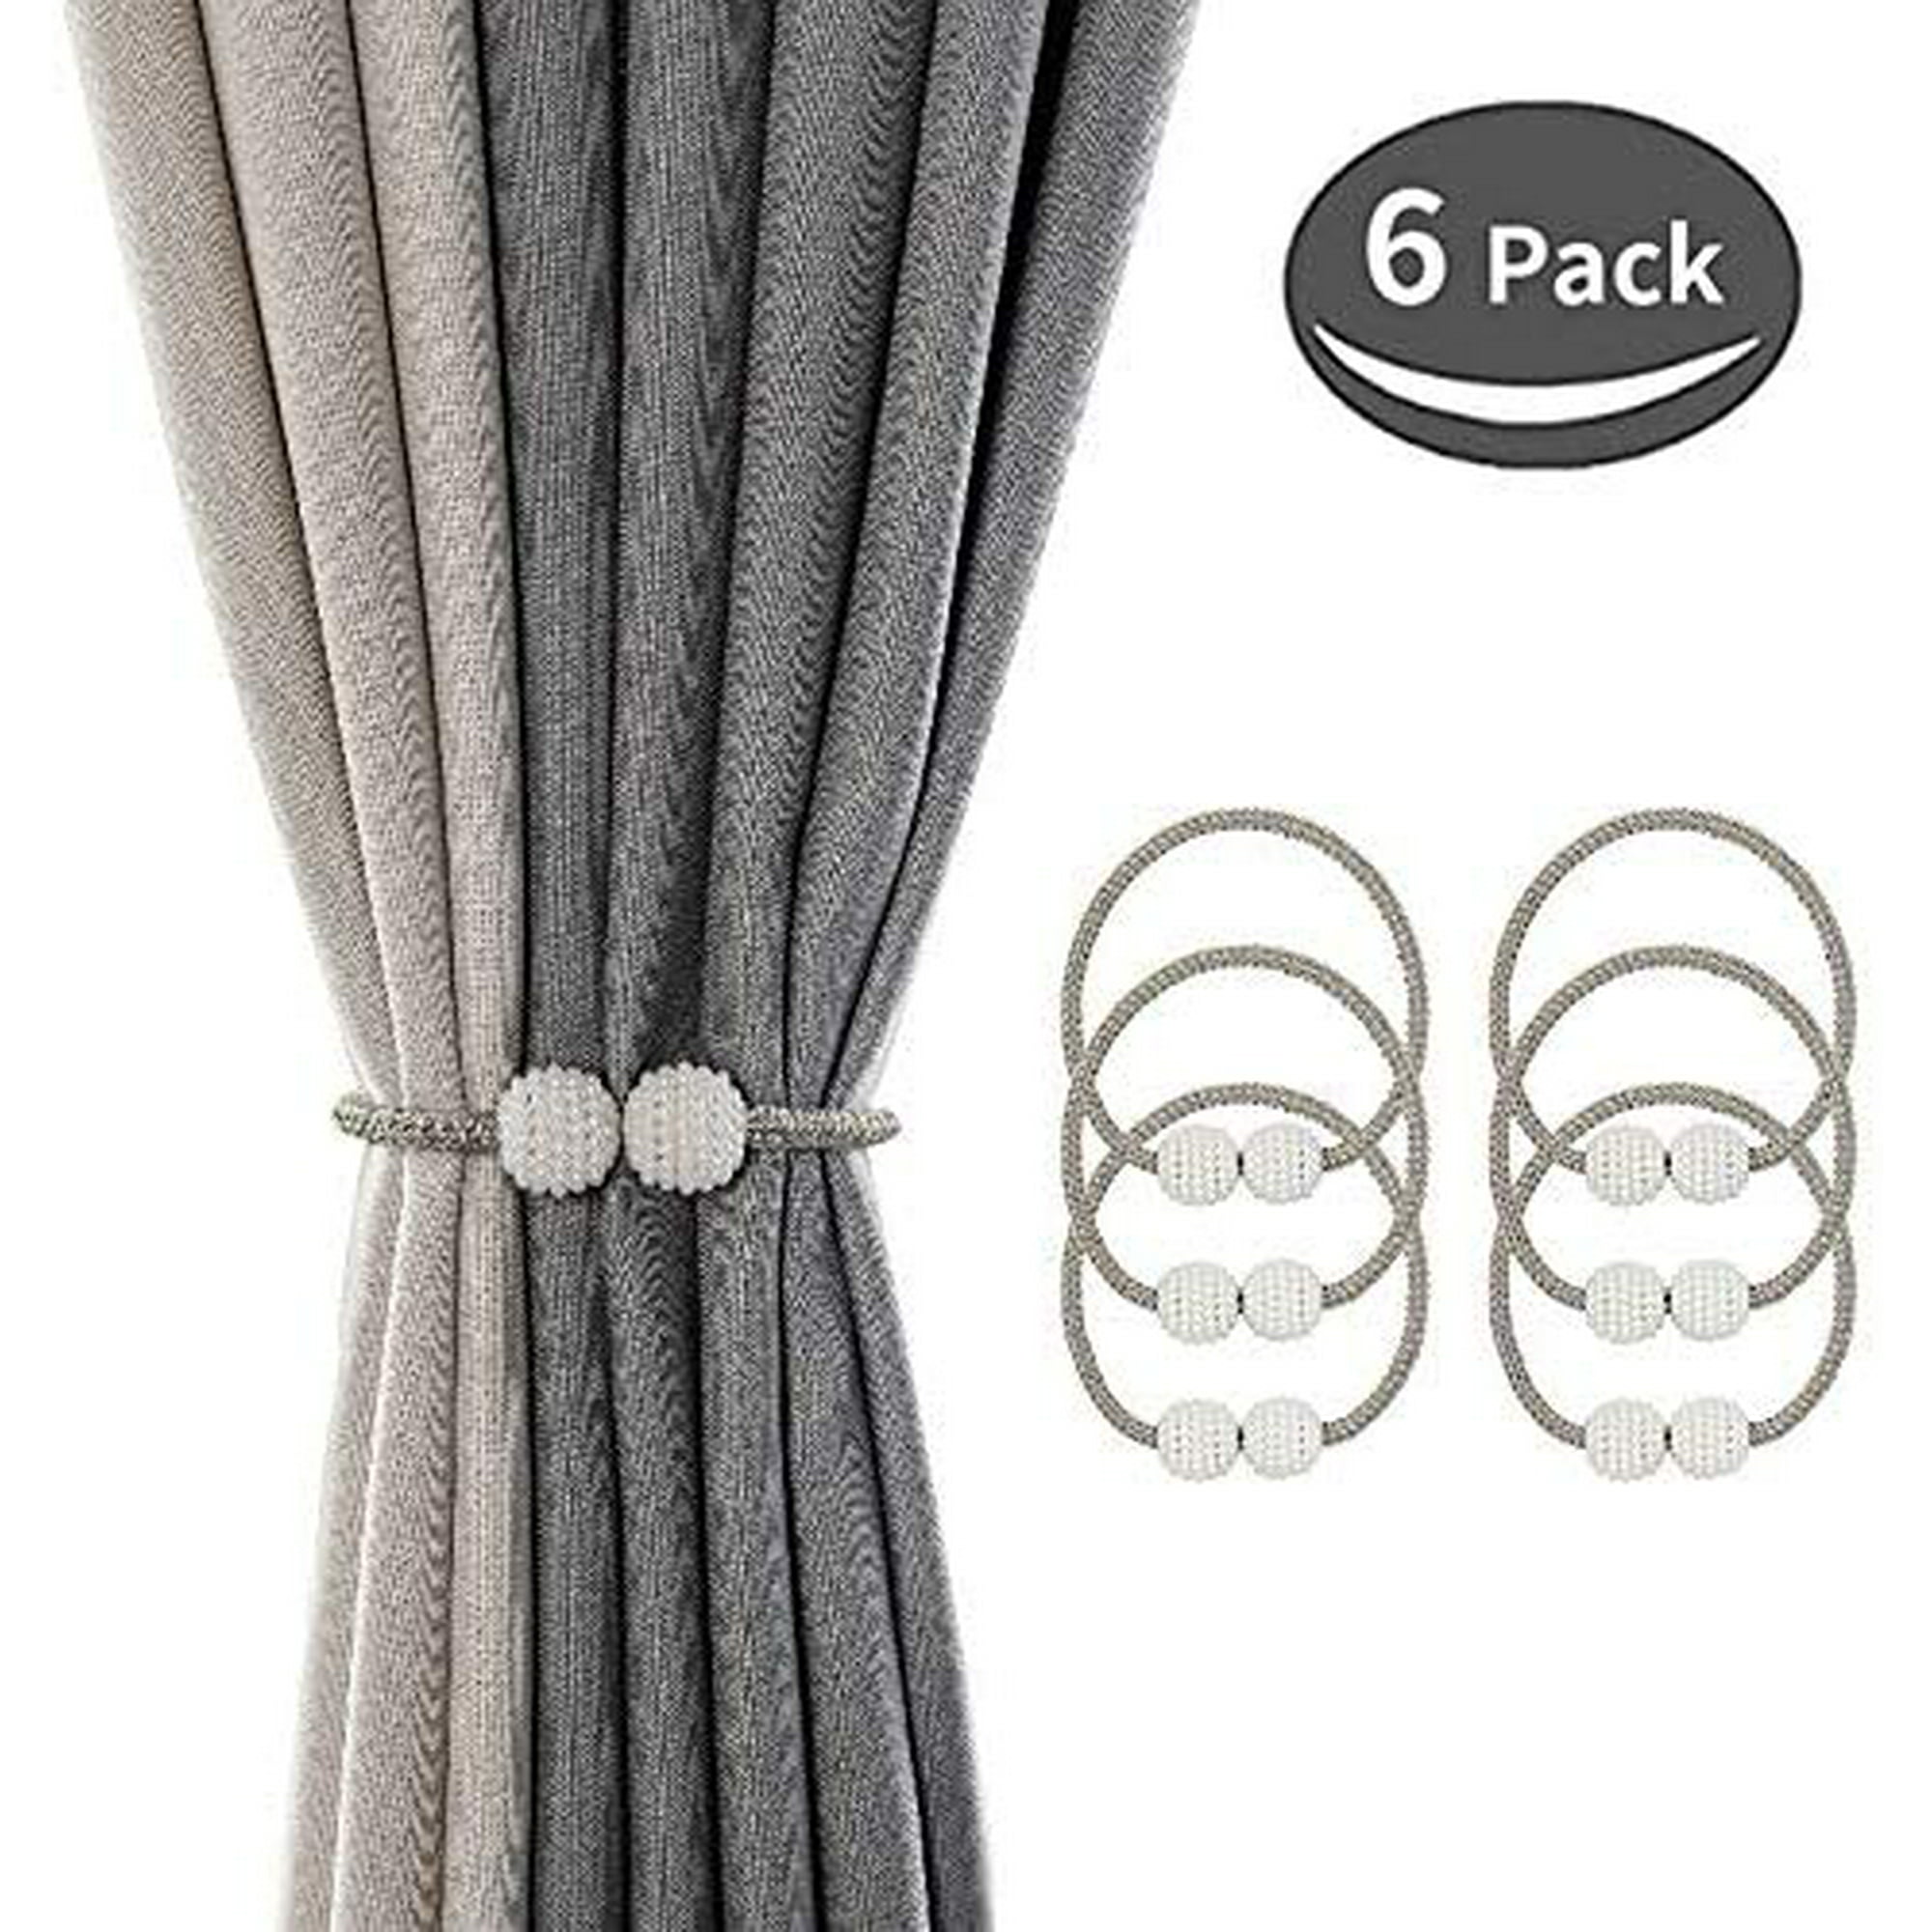 2 Pack Magnetic Curtain Tiebacks Drapery Holdbacks For Curtains